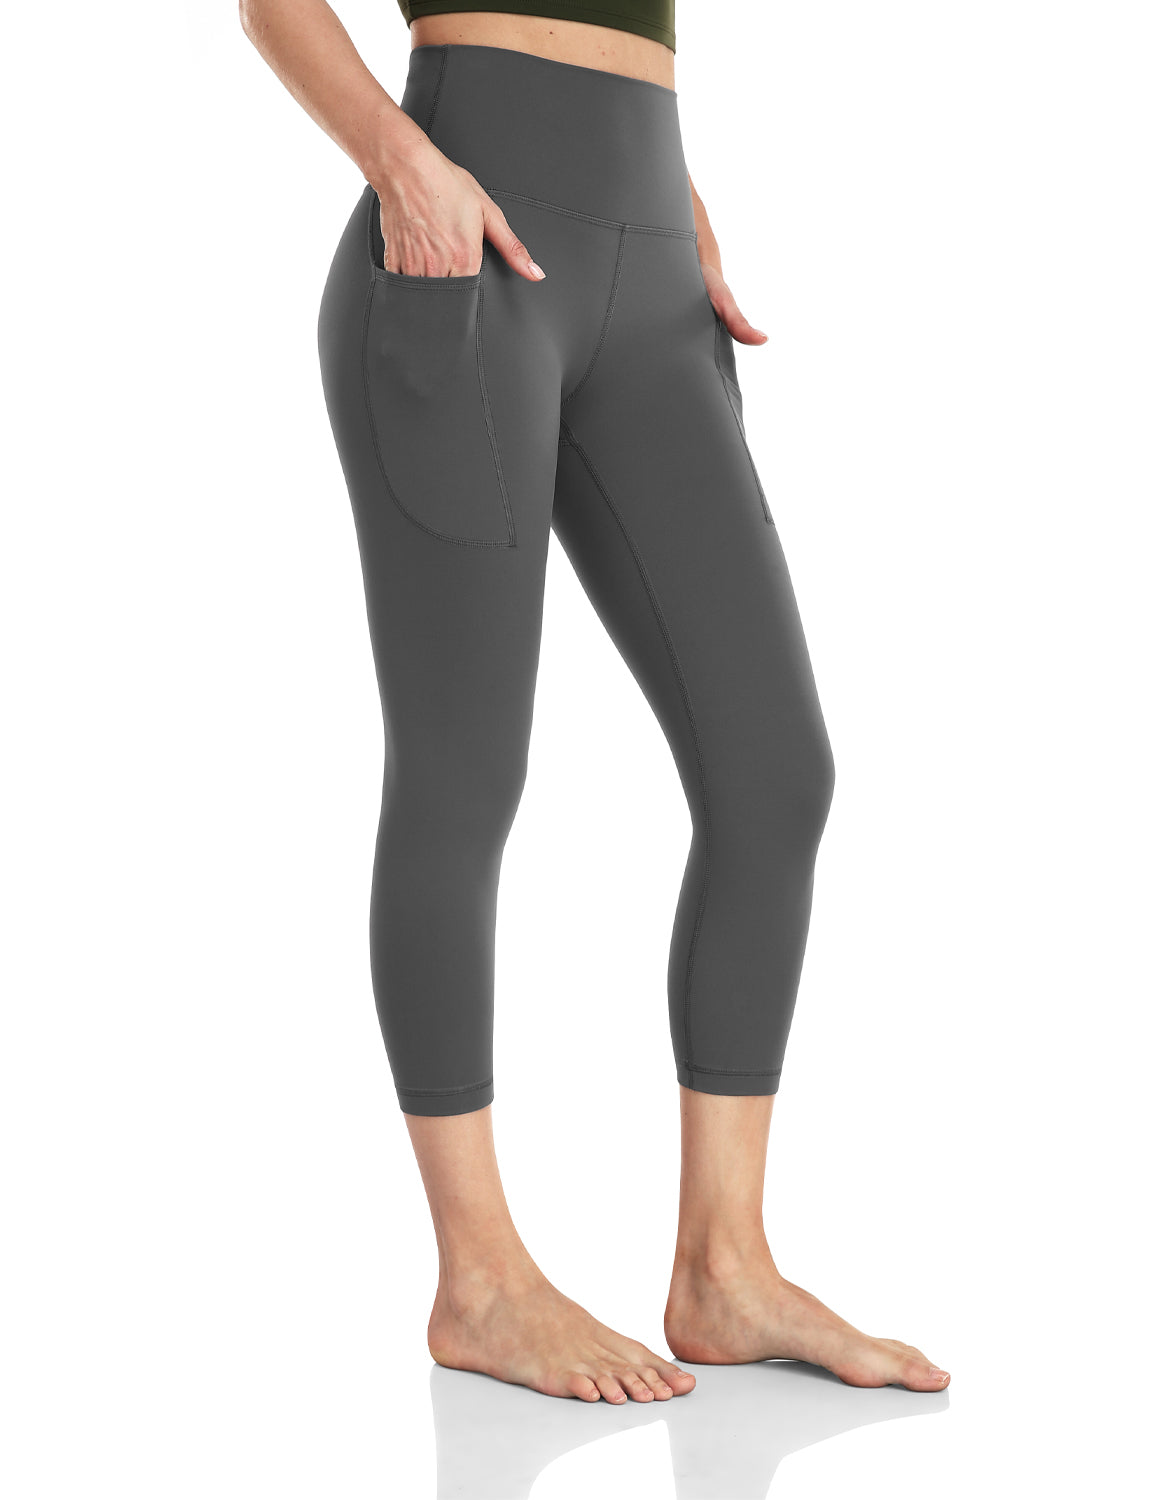 HeyNuts Essential Yoga Capris Leggings With Side Pockets 21